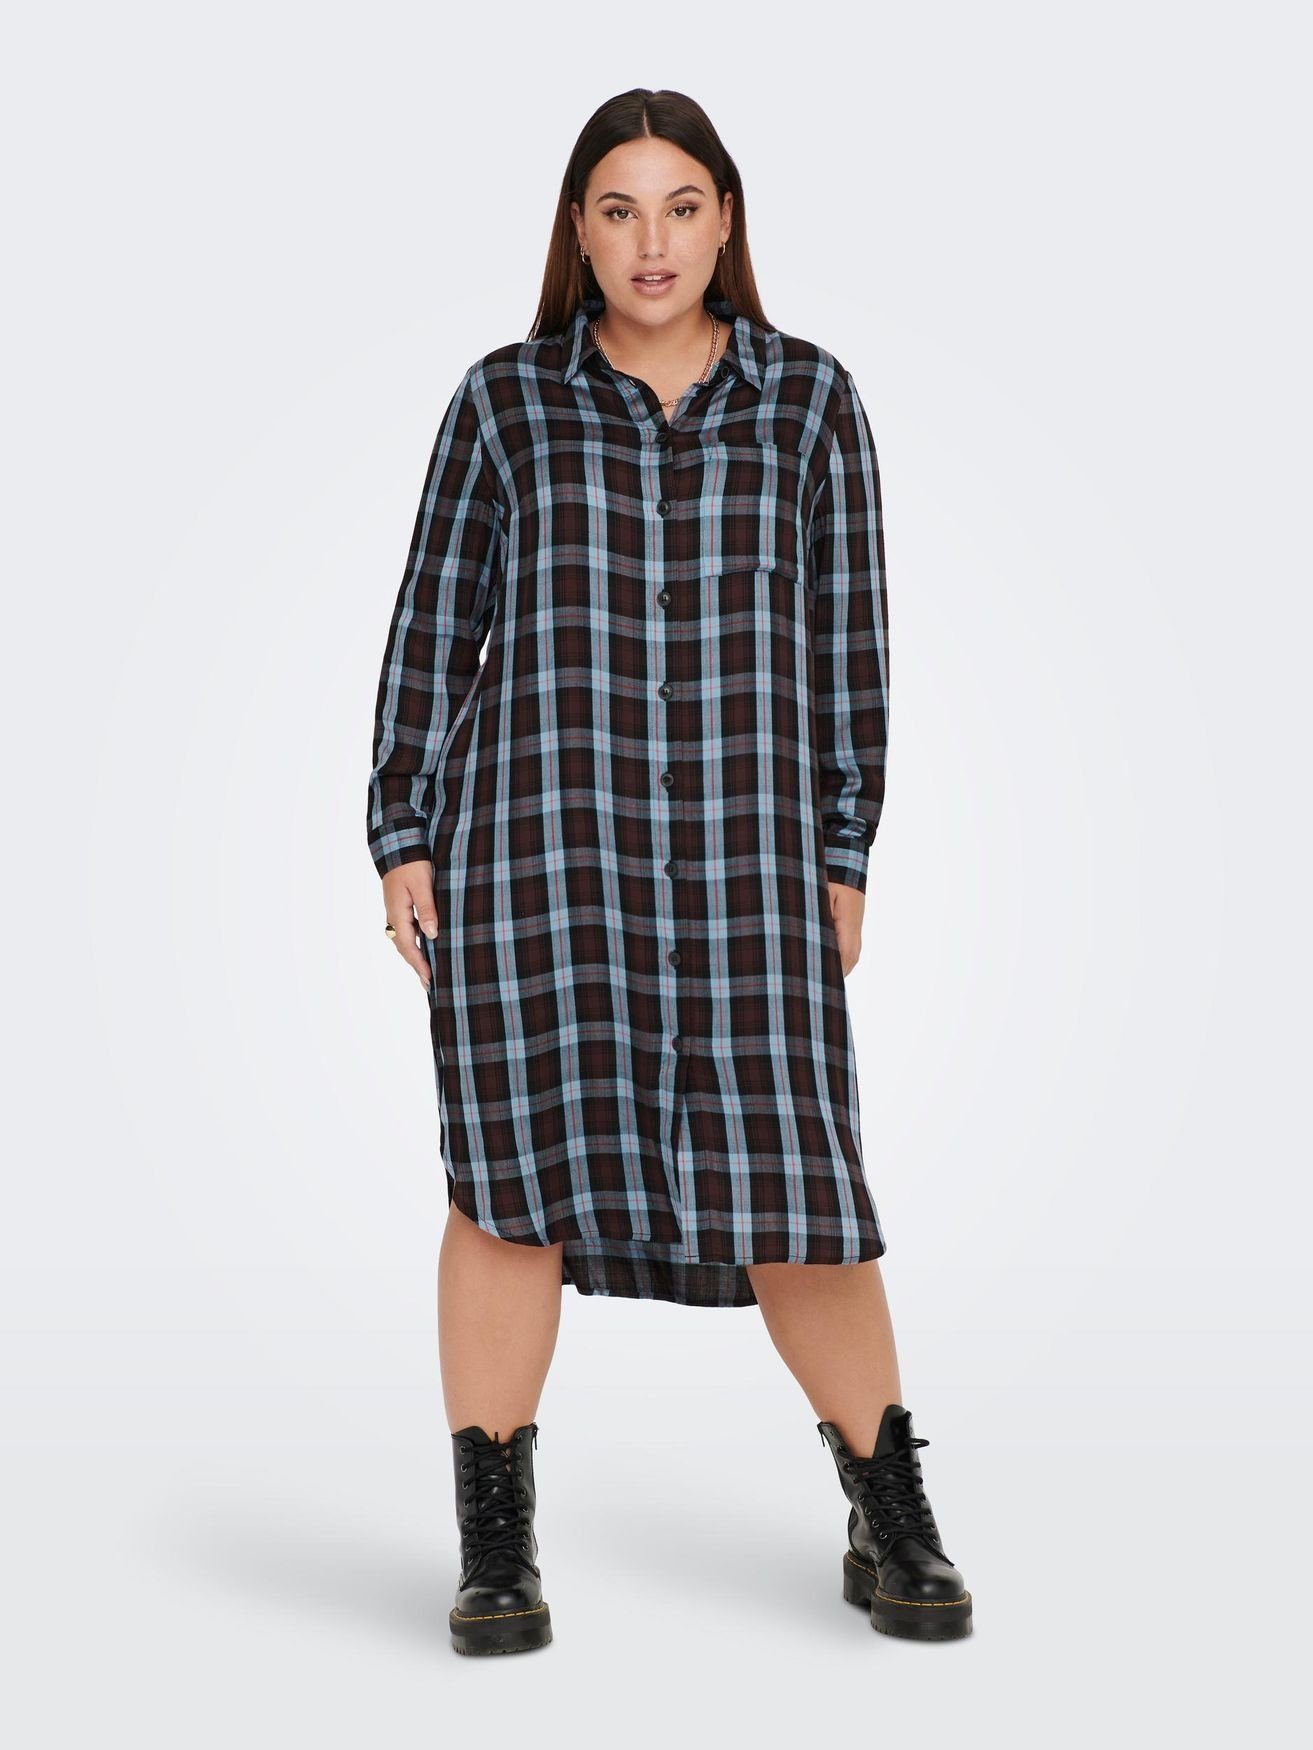 Schwarz-Blau Holzfäller in (lang) CARMAKOMA Shirtkleid Midi ONLY Kariertes 4571 Plus Size Kleid Design Übergröße